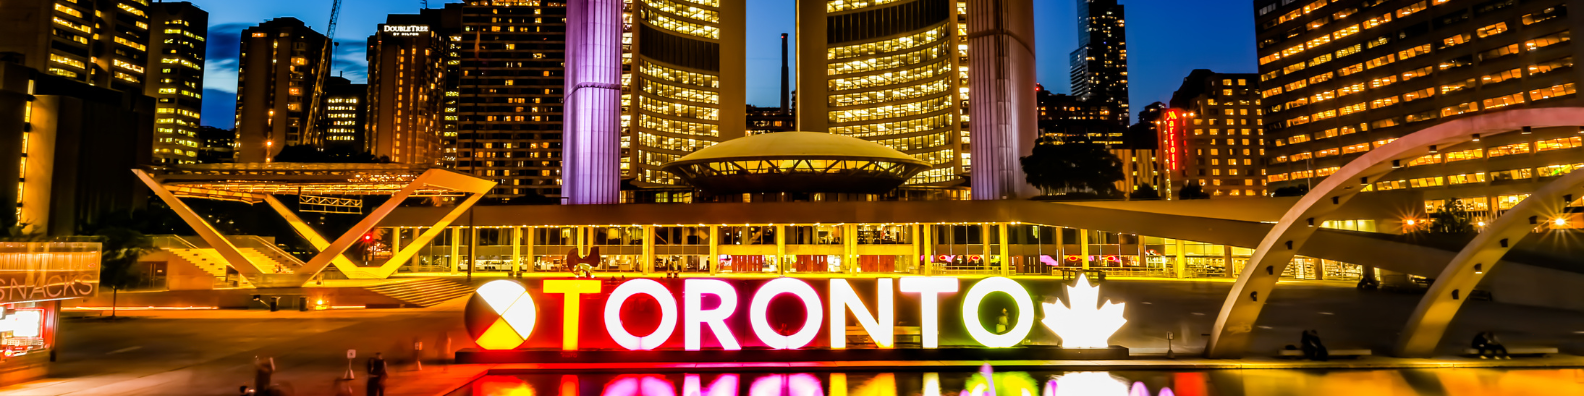 Toronto city sign at night